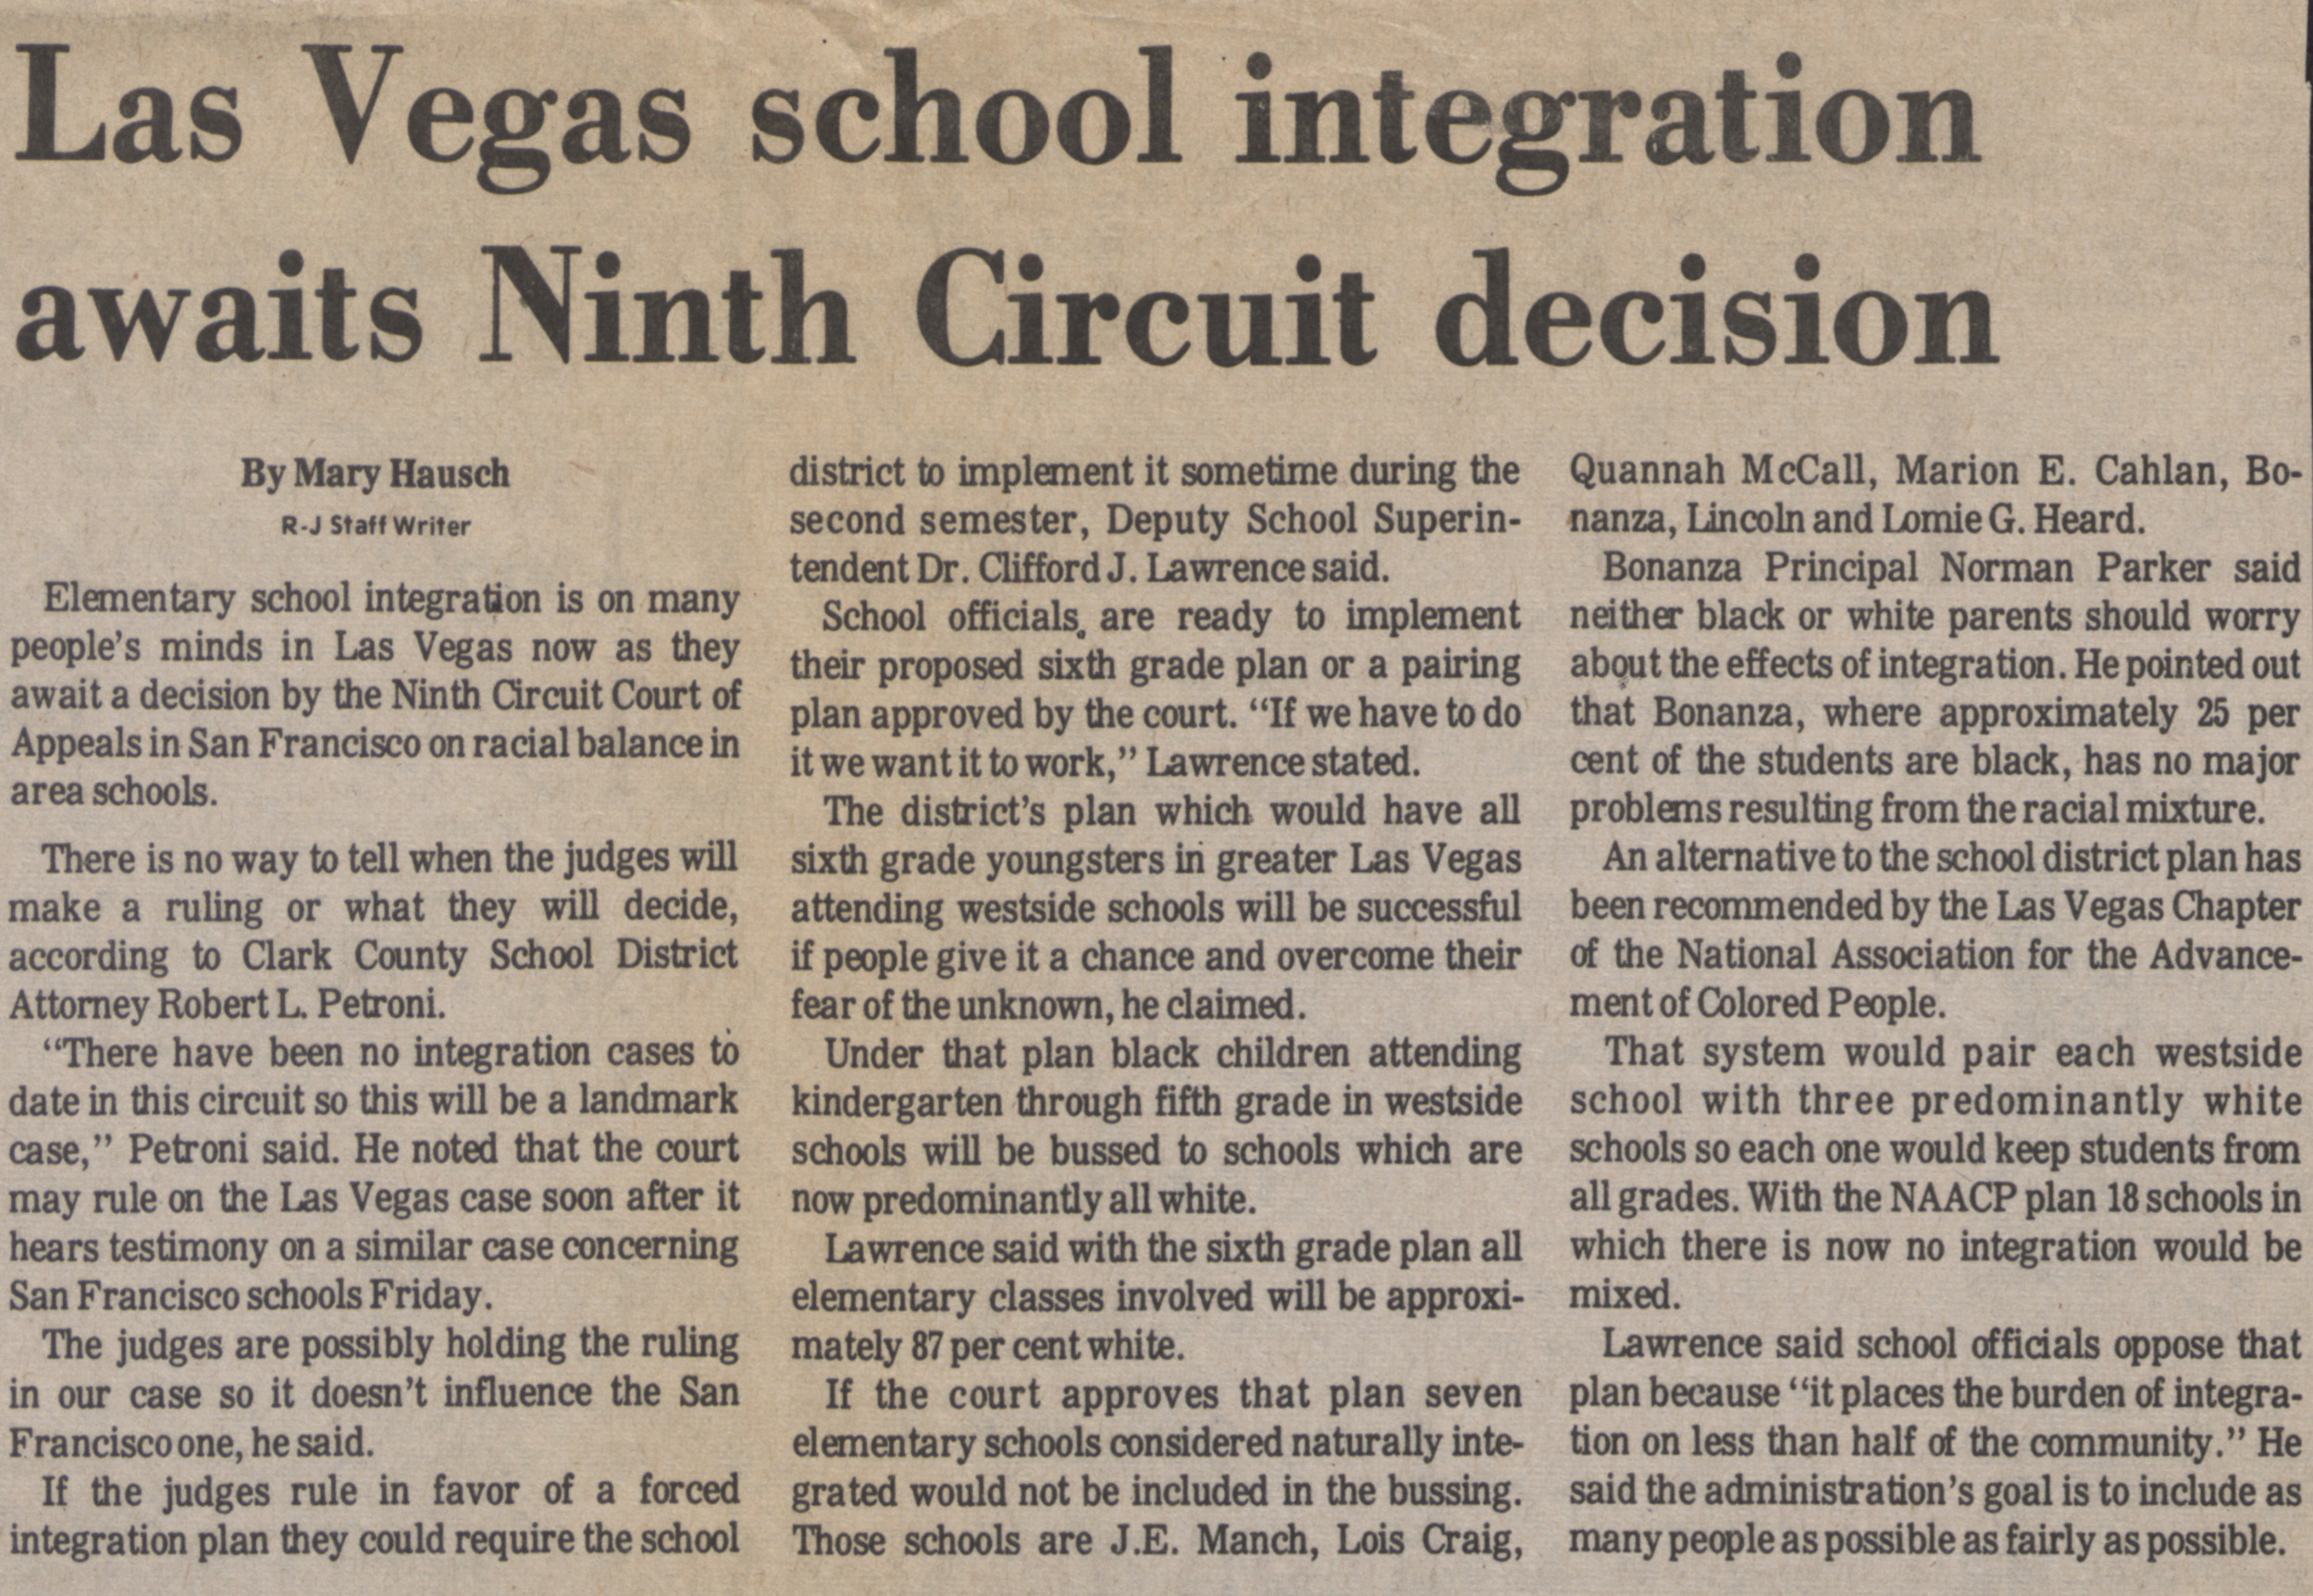 Newspaper clipping, Las Vegas school integration awaits Ninth Circuit decision, Las Vegas Review-Journal, January 13, 1972